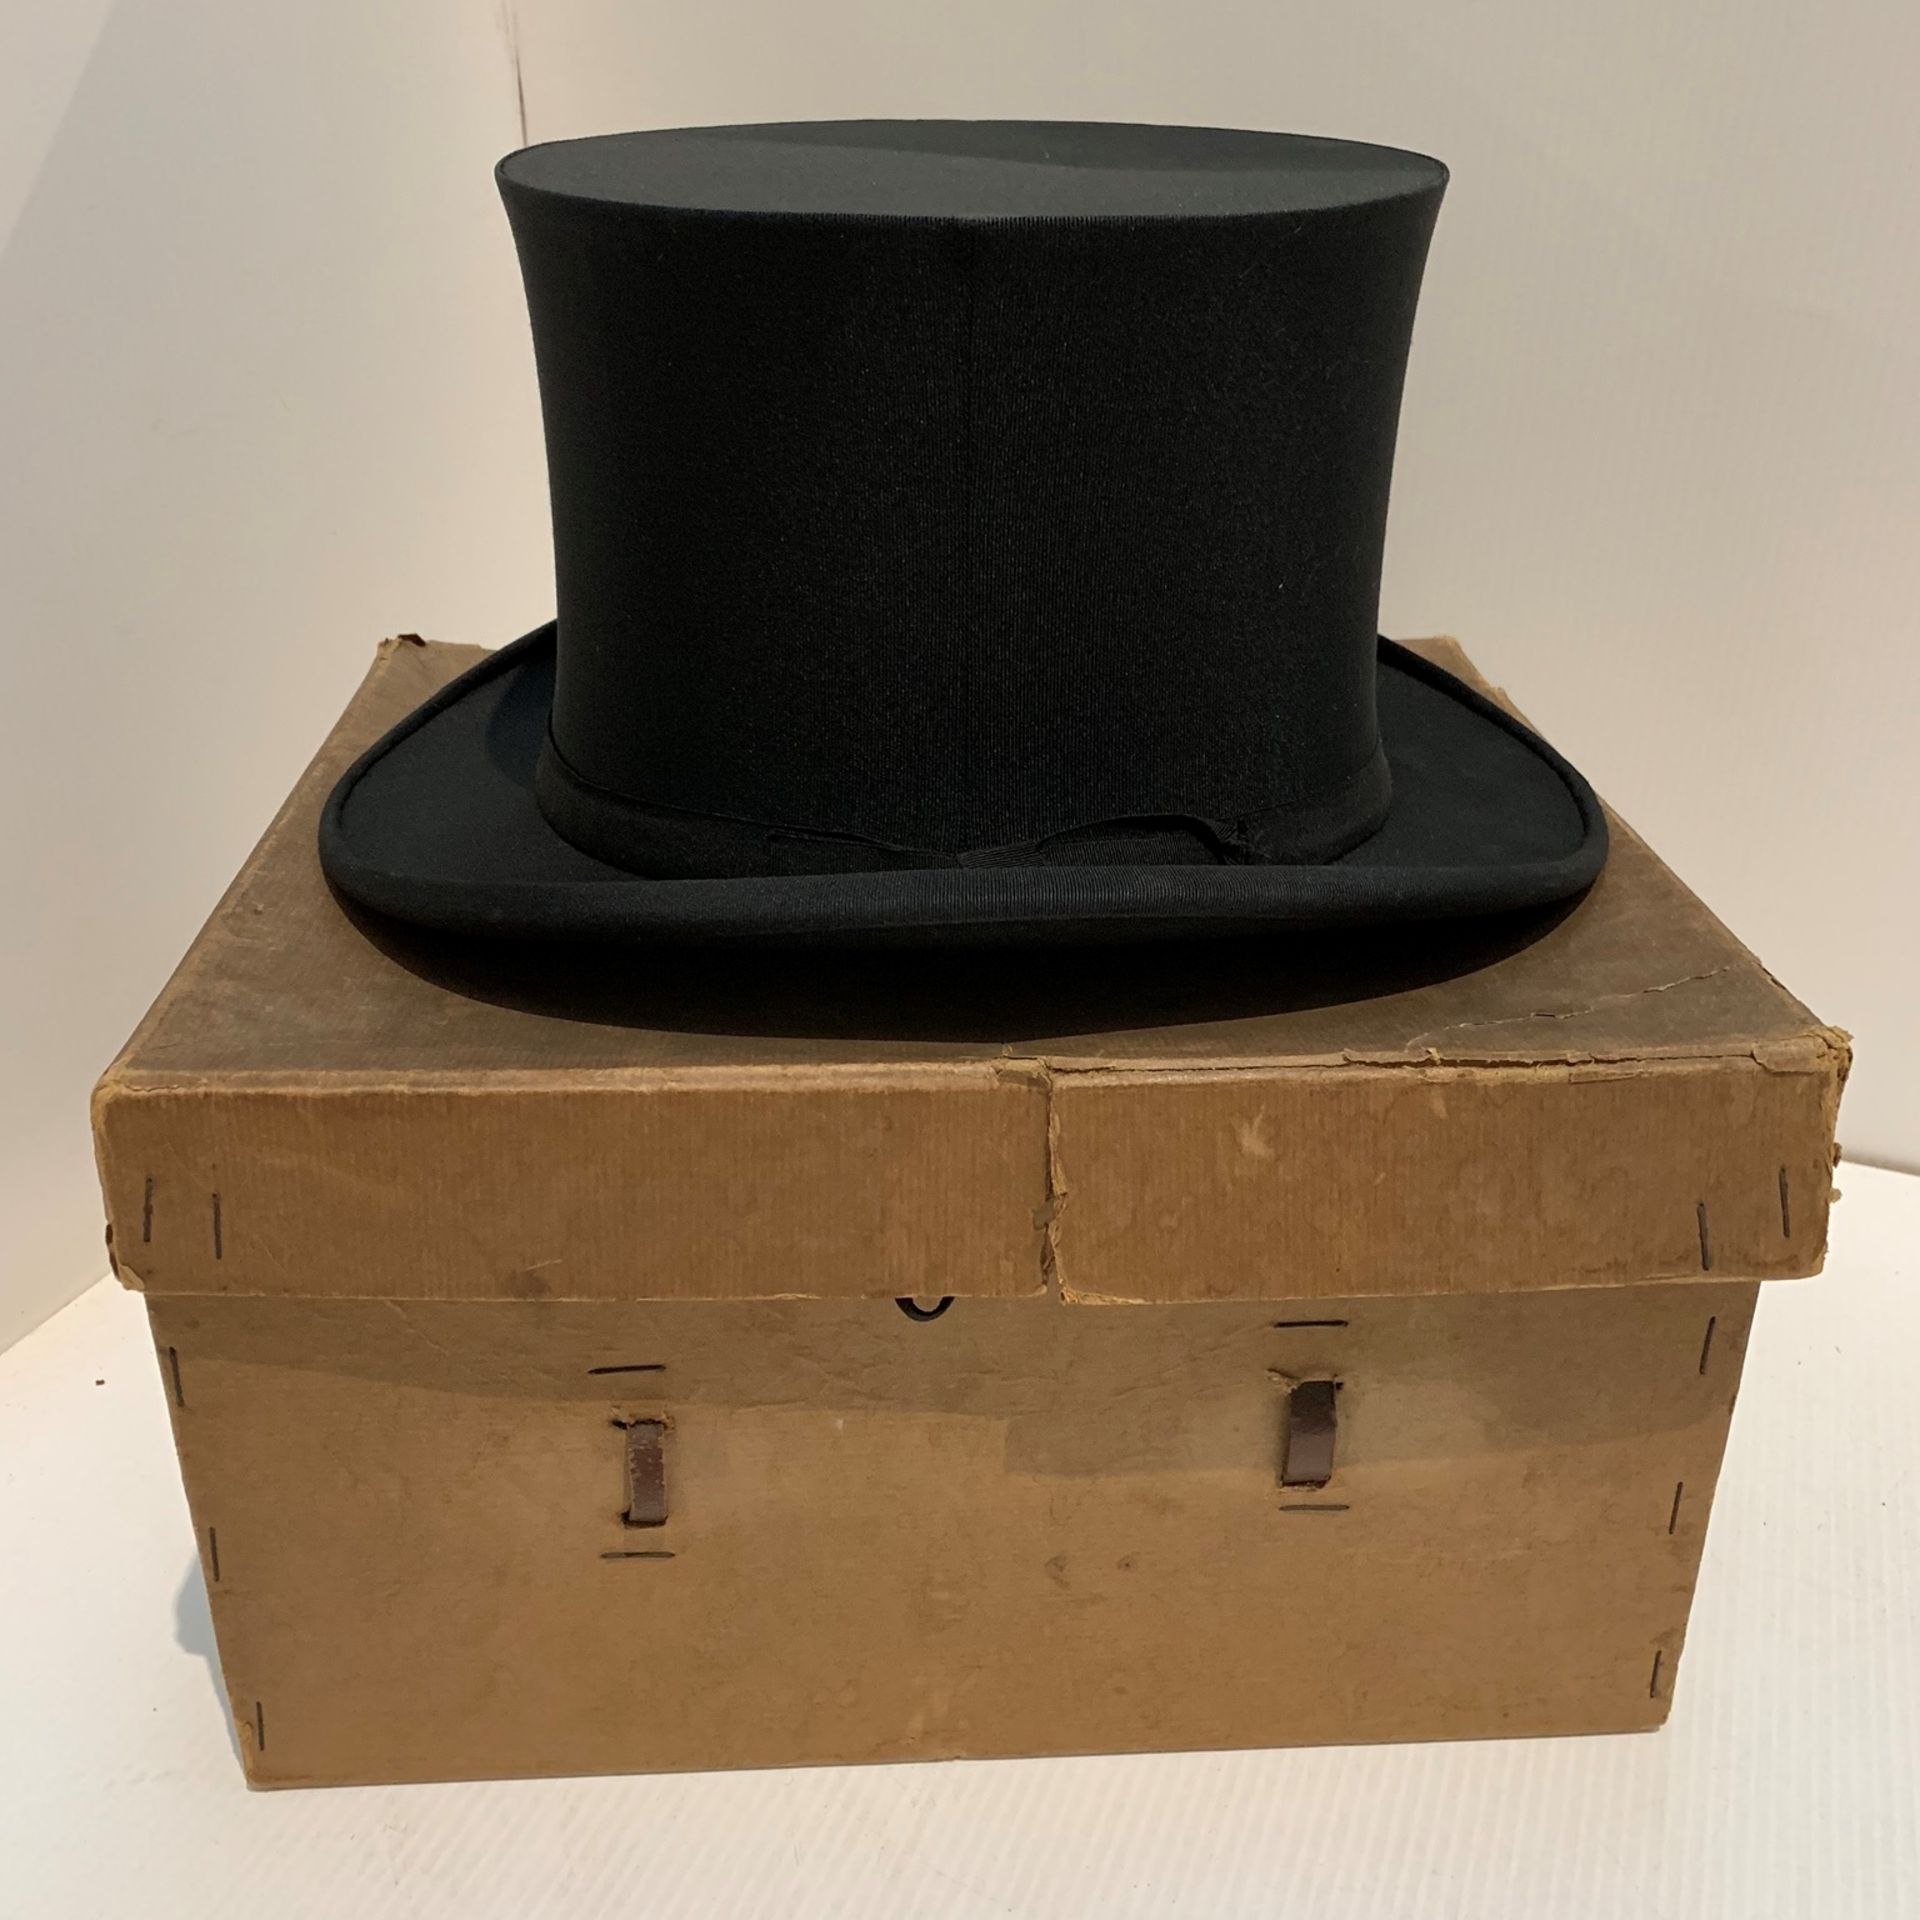 Dunn & Co top hat in cardboard case